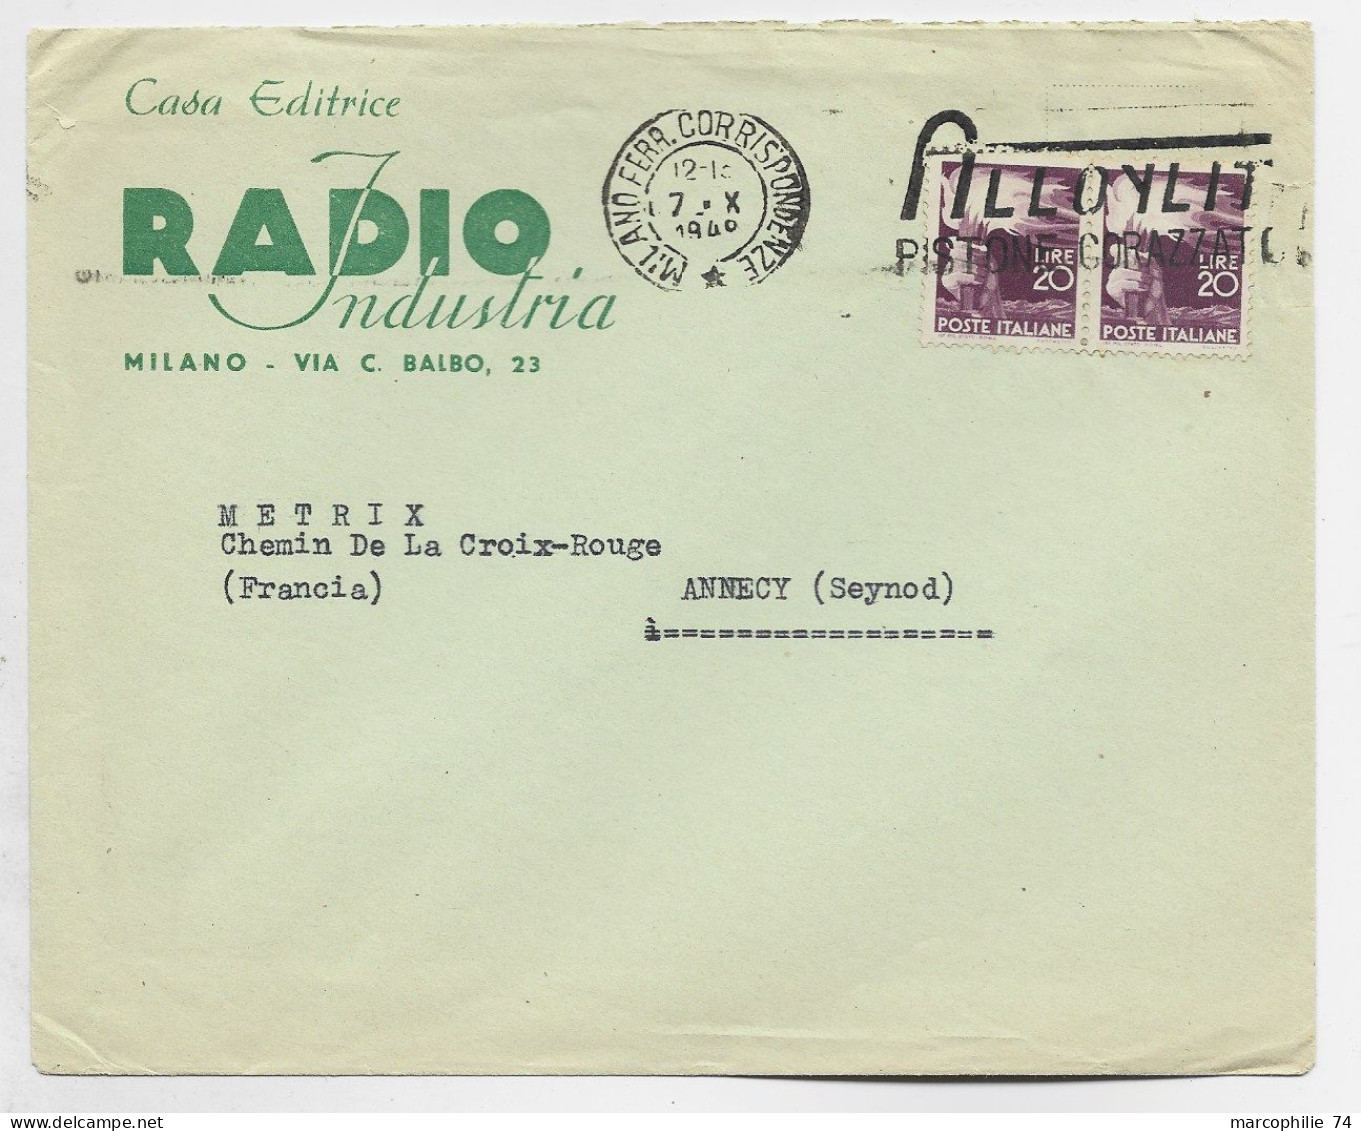 ITALIA 20 LIREX2 LETTRE LETTERA COVER ENTETE RADIO MILANO 1948 TO FRANCE - 1946-60: Marcophilie